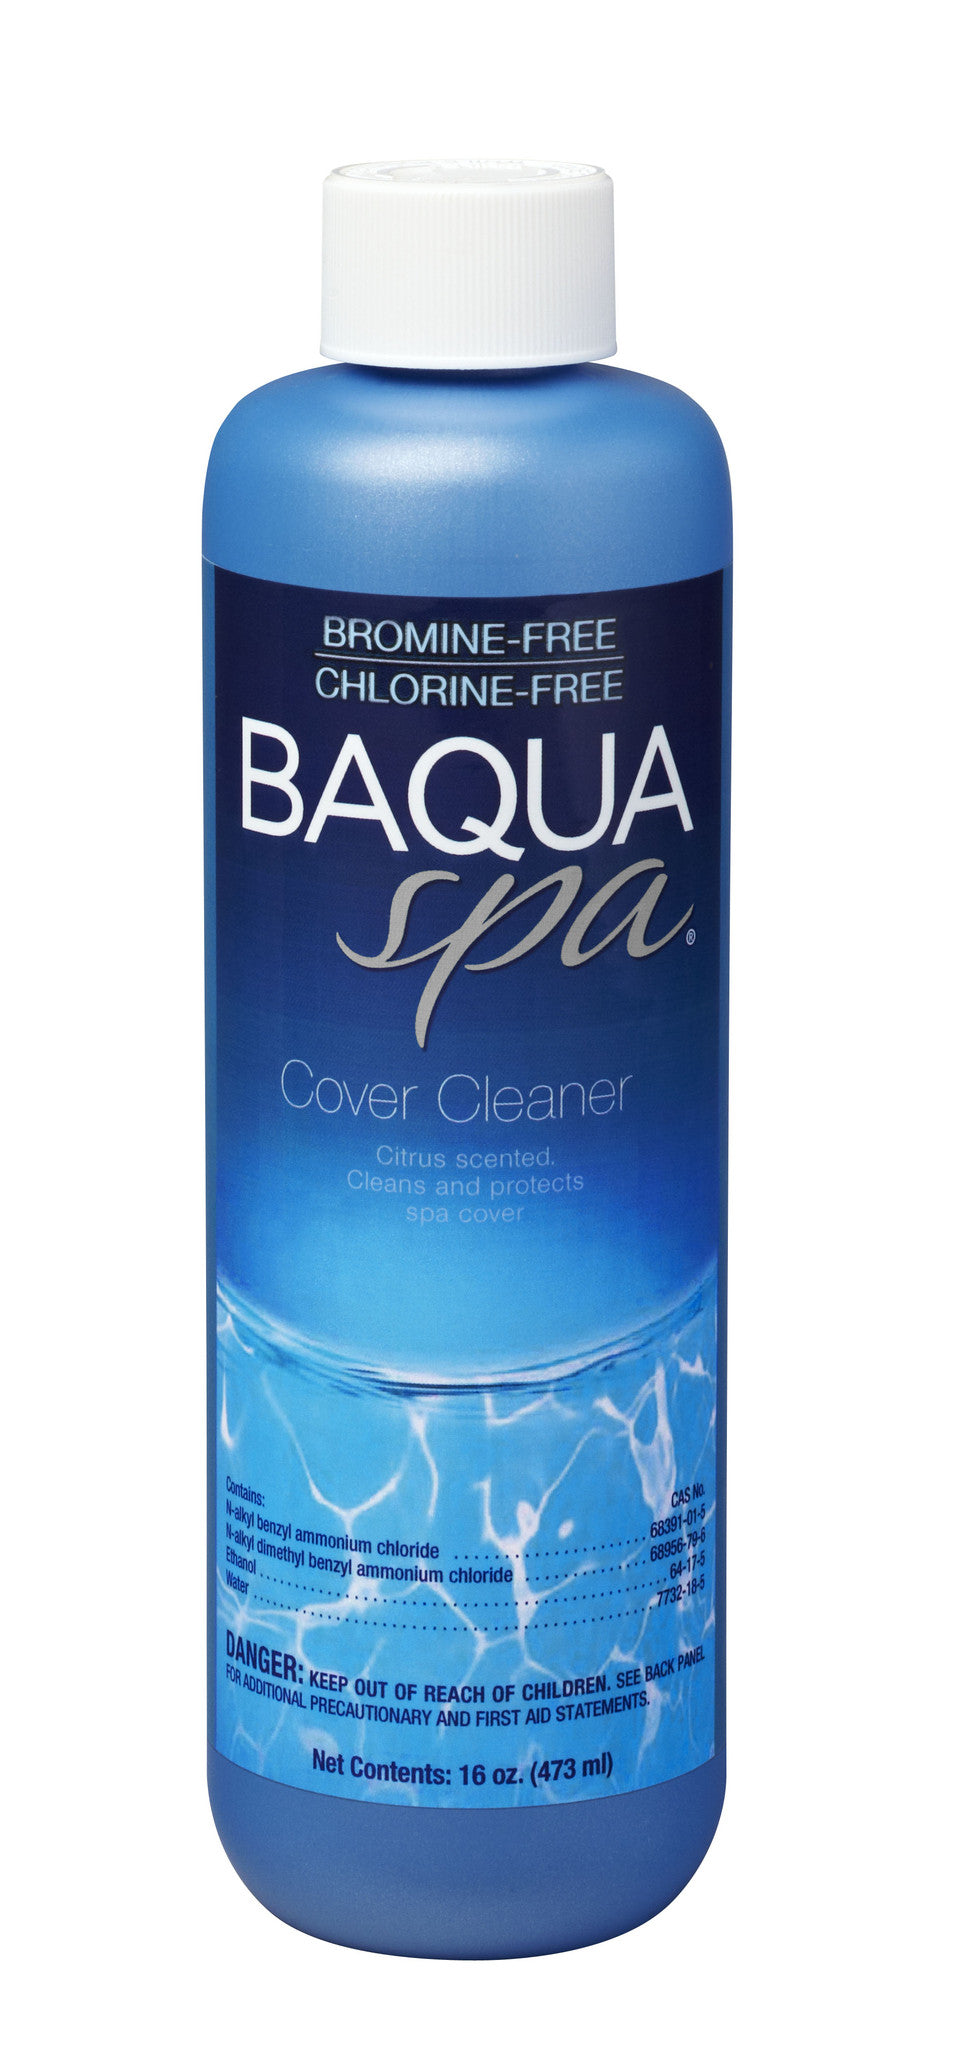 Baqua Spa cover cleaner